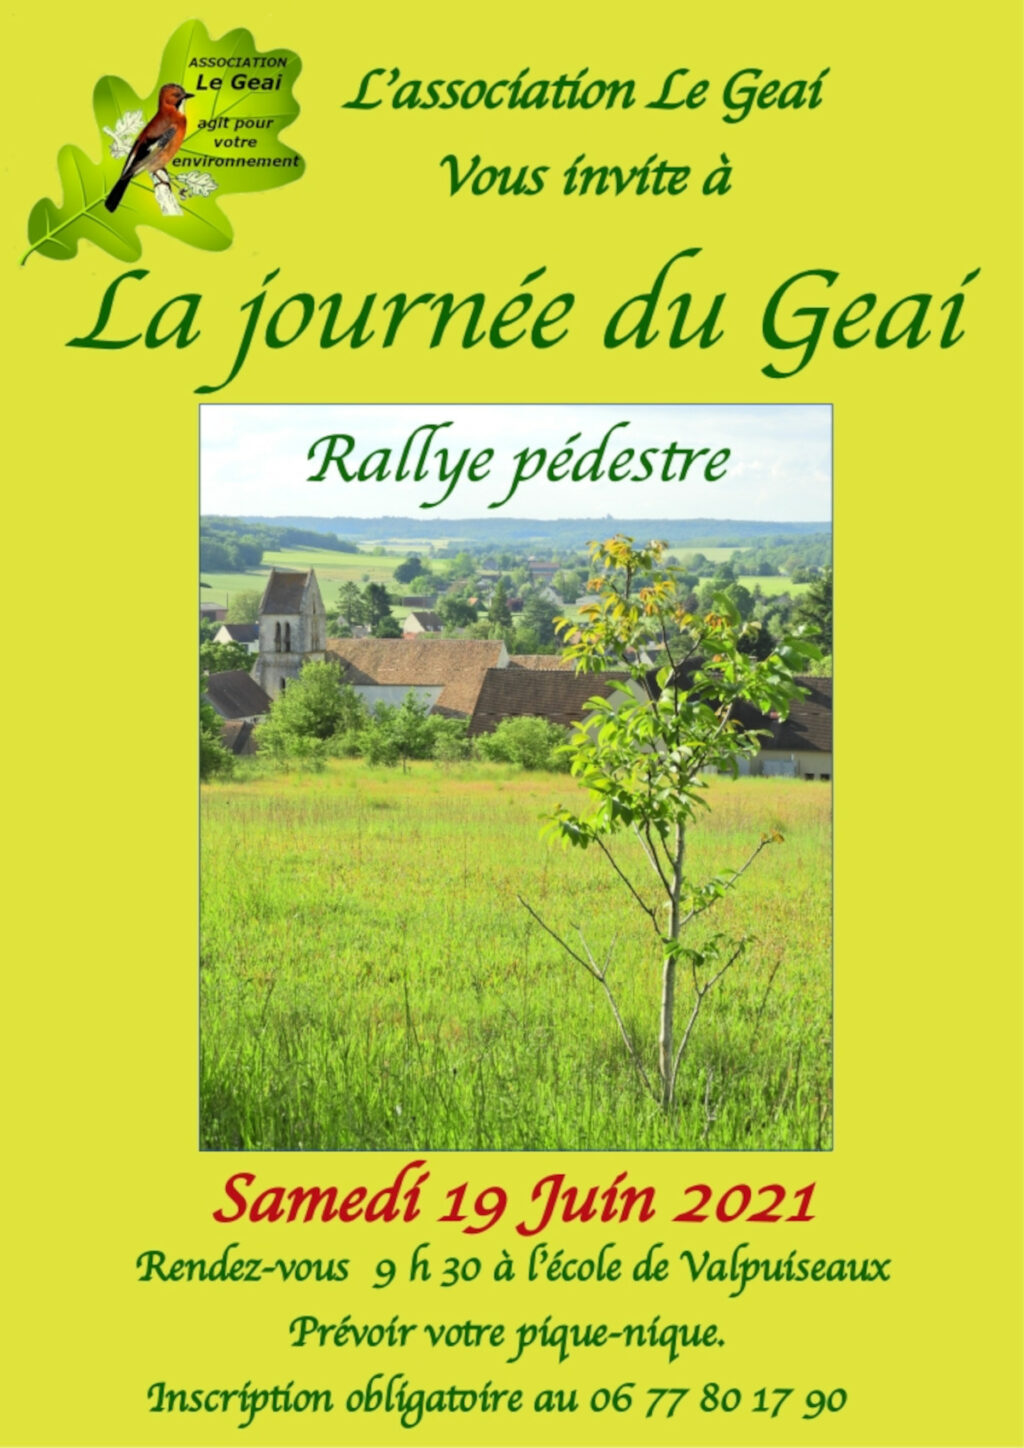 Le Journée du Geai se déroulera le samedi 19 juin 2021.